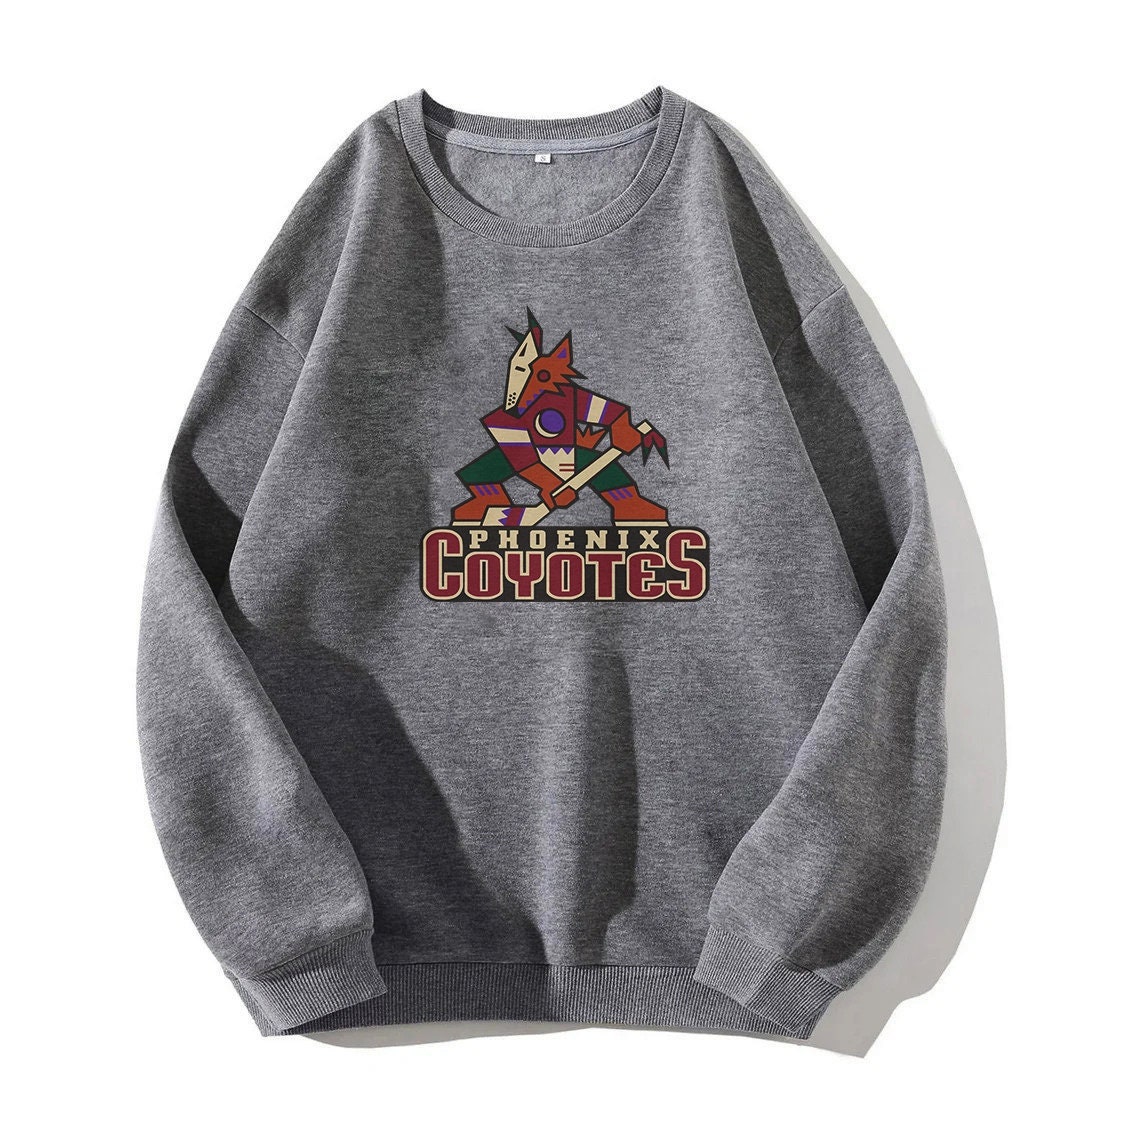 Vintage Reebok - Phoenix Coyotes Crew Neck Sweatshirt 2000s Large